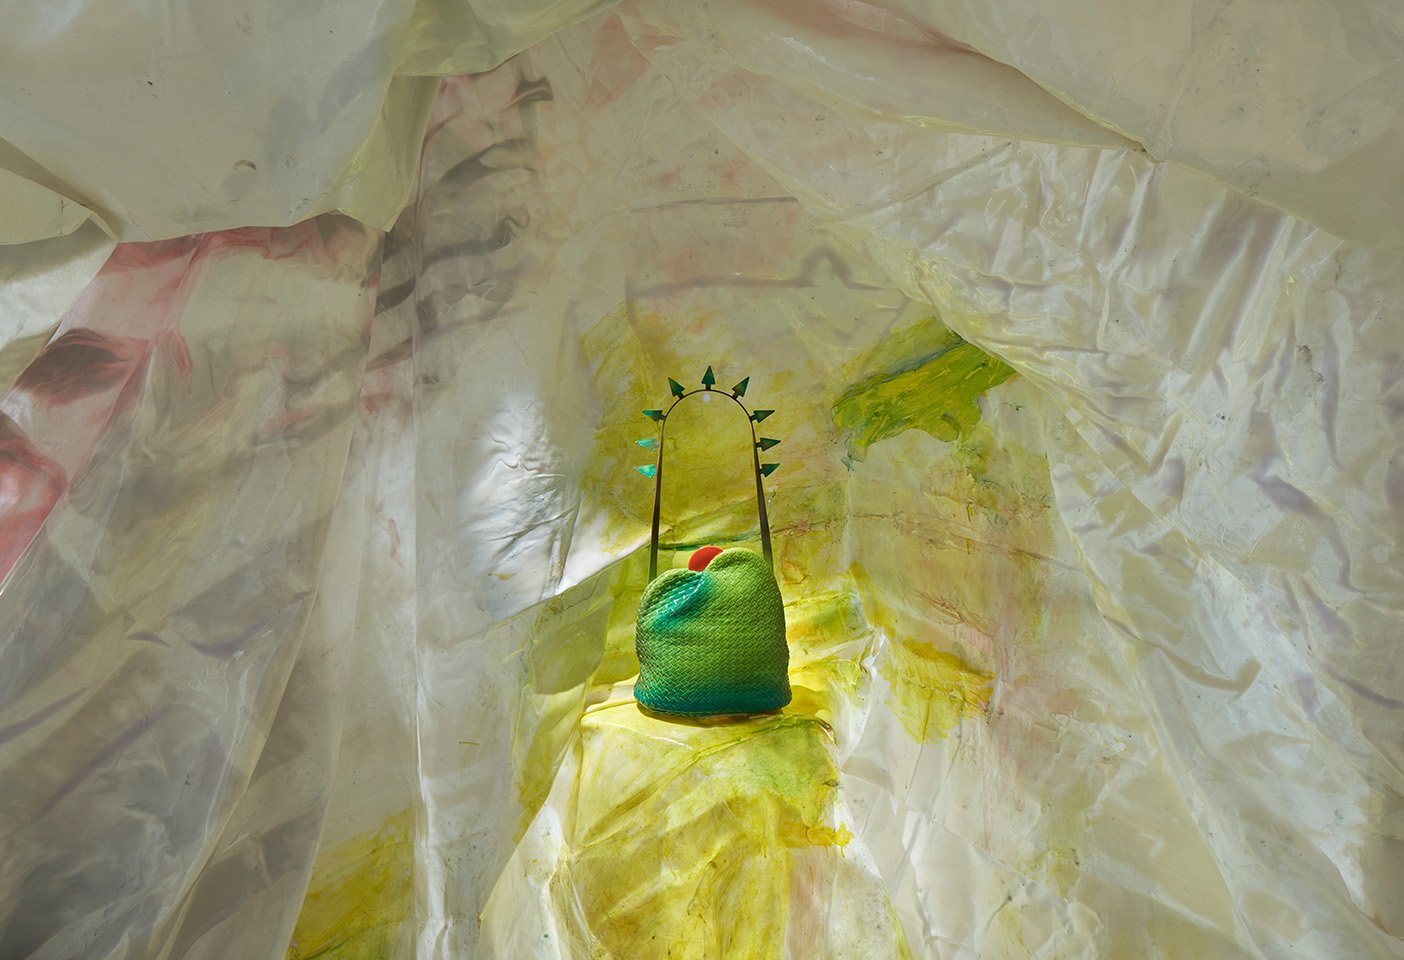 Gaetano Pesce's limited edition 'My Dear Mountains' bag for Bottega Veneta. Photo c/o Bottega Veneta.